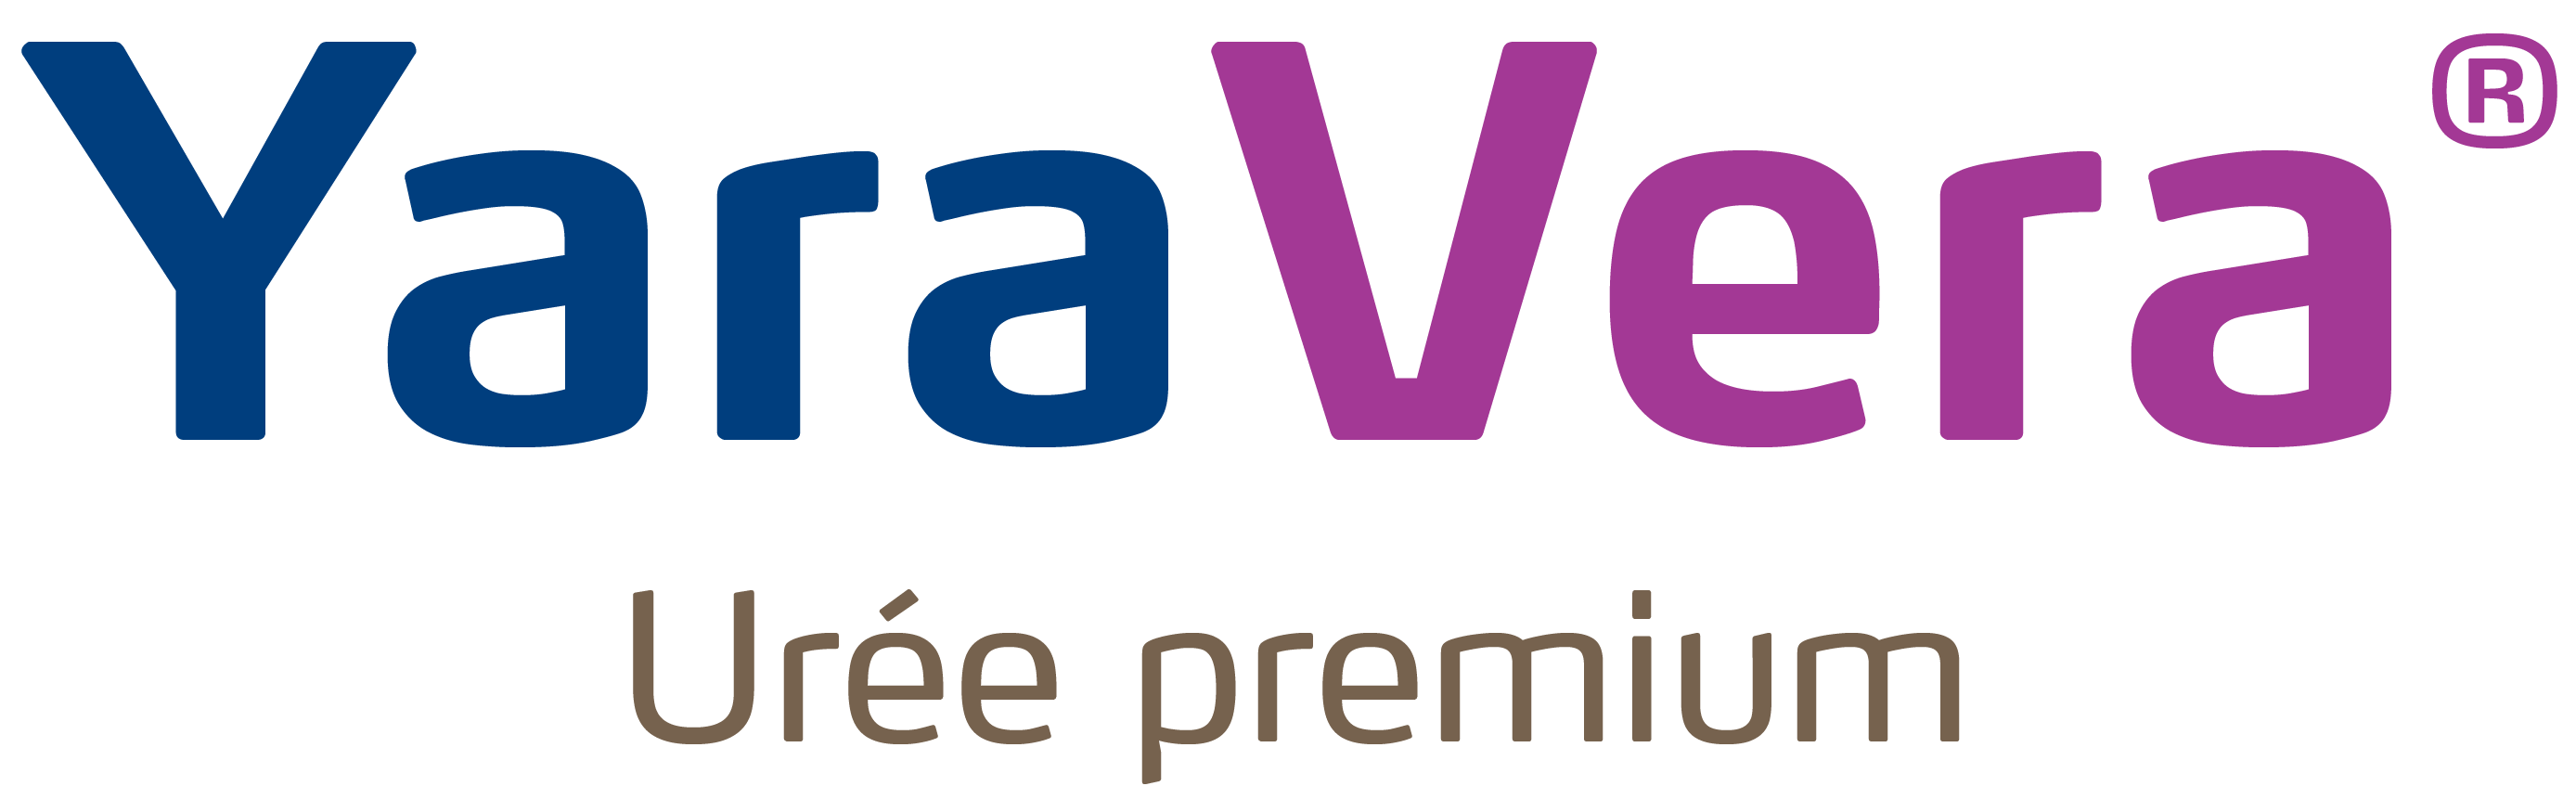 yaravera-tagline-french-2019-03-06.png